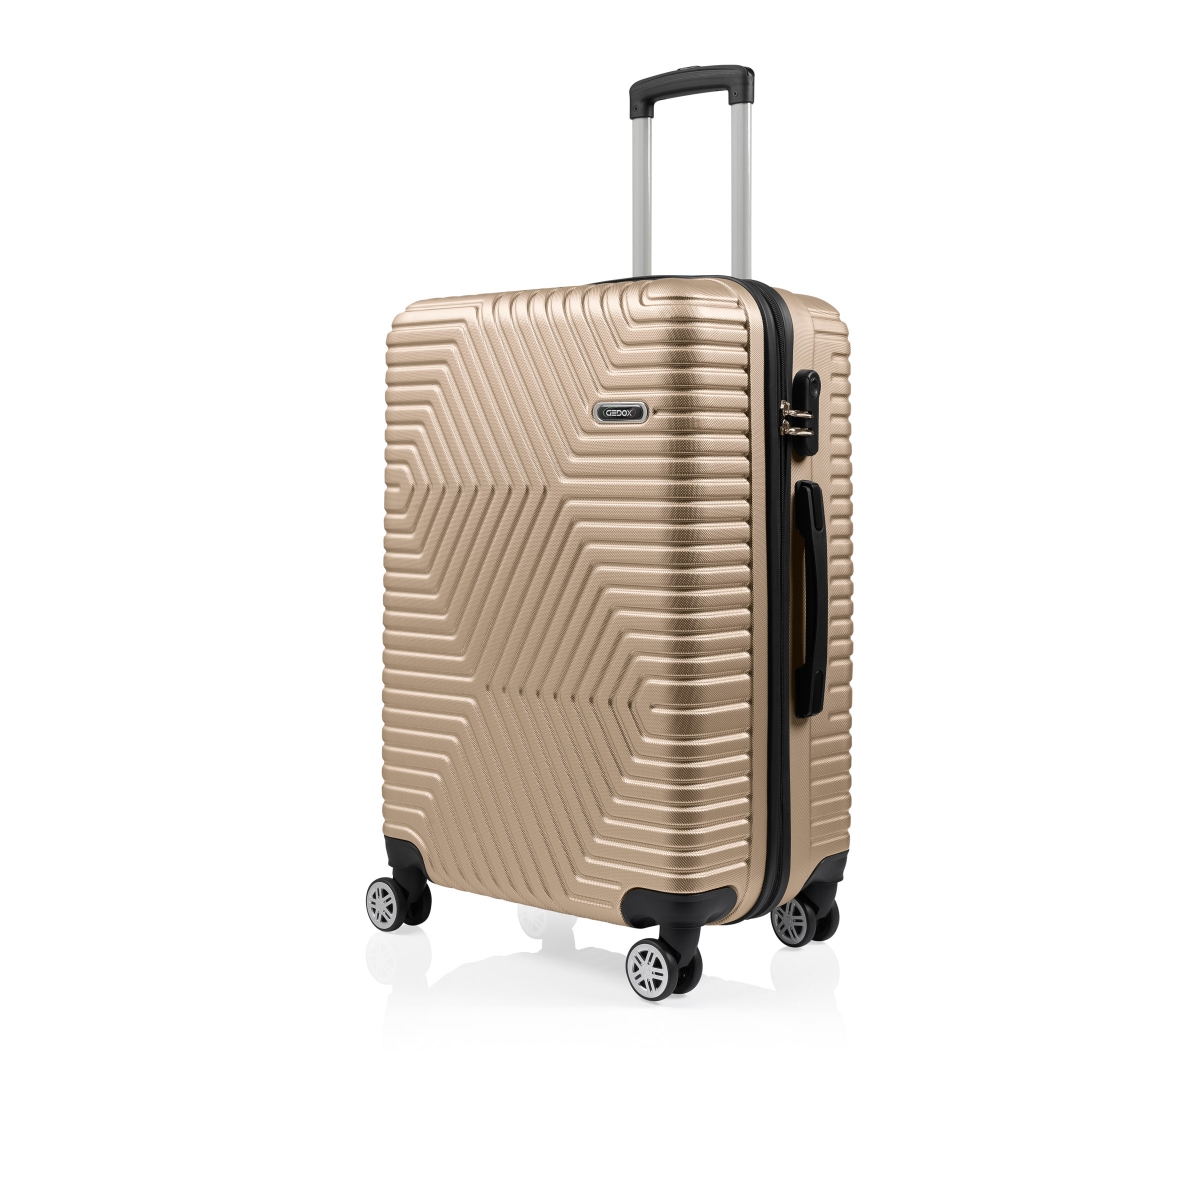 G&D Polo Suitcase ABS 3'lü Lüx Valiz Seyahat Seti - Model:600.06 Gold